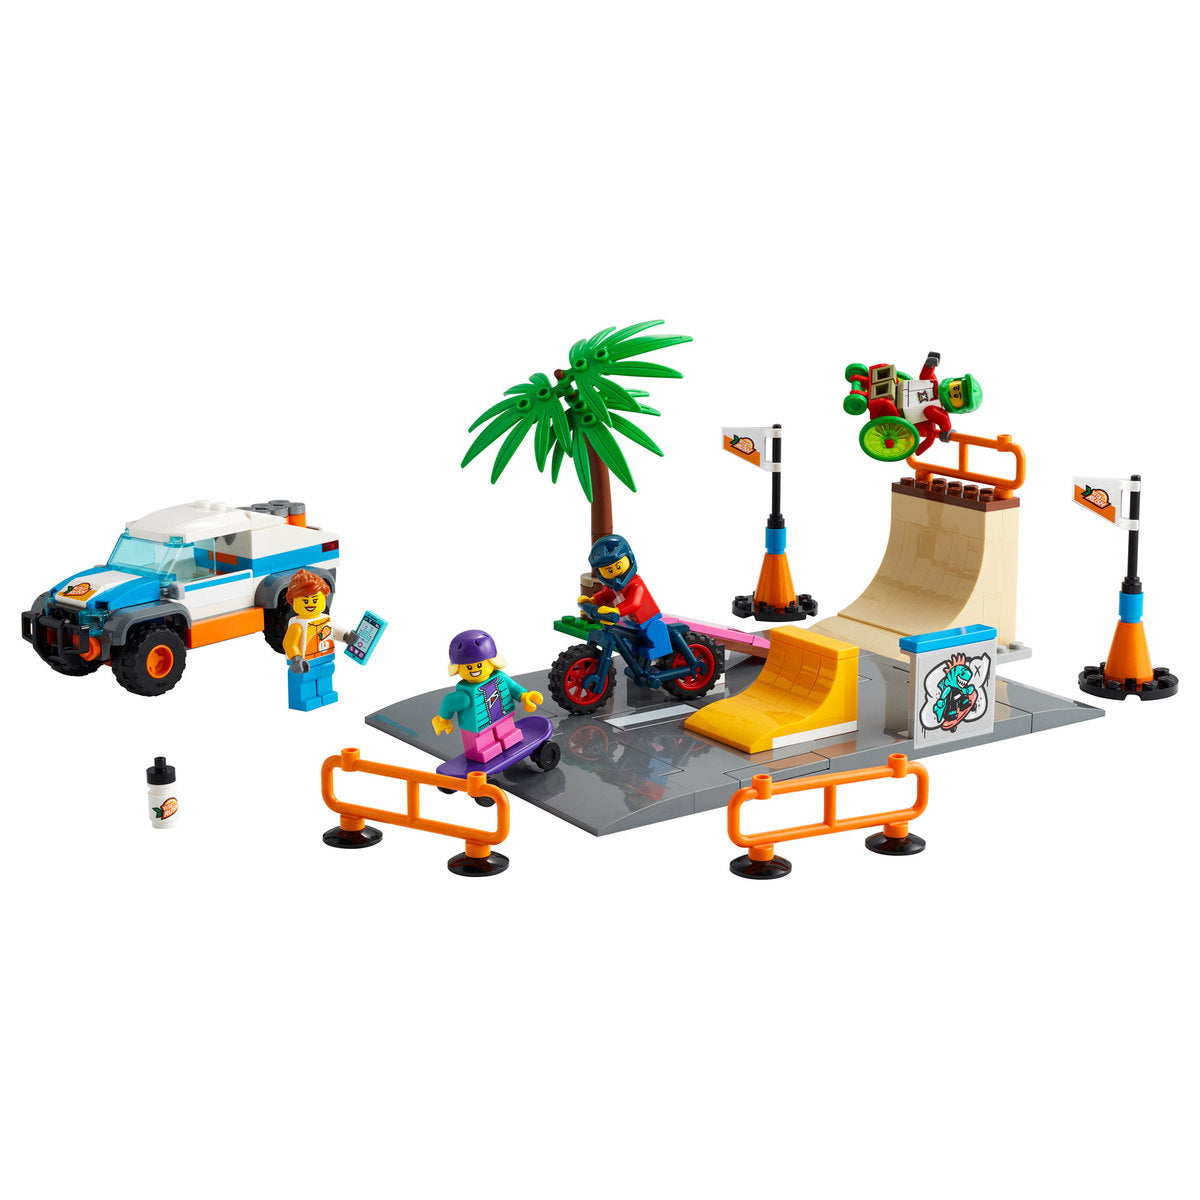 LEGO City Community Skate Park - 60290